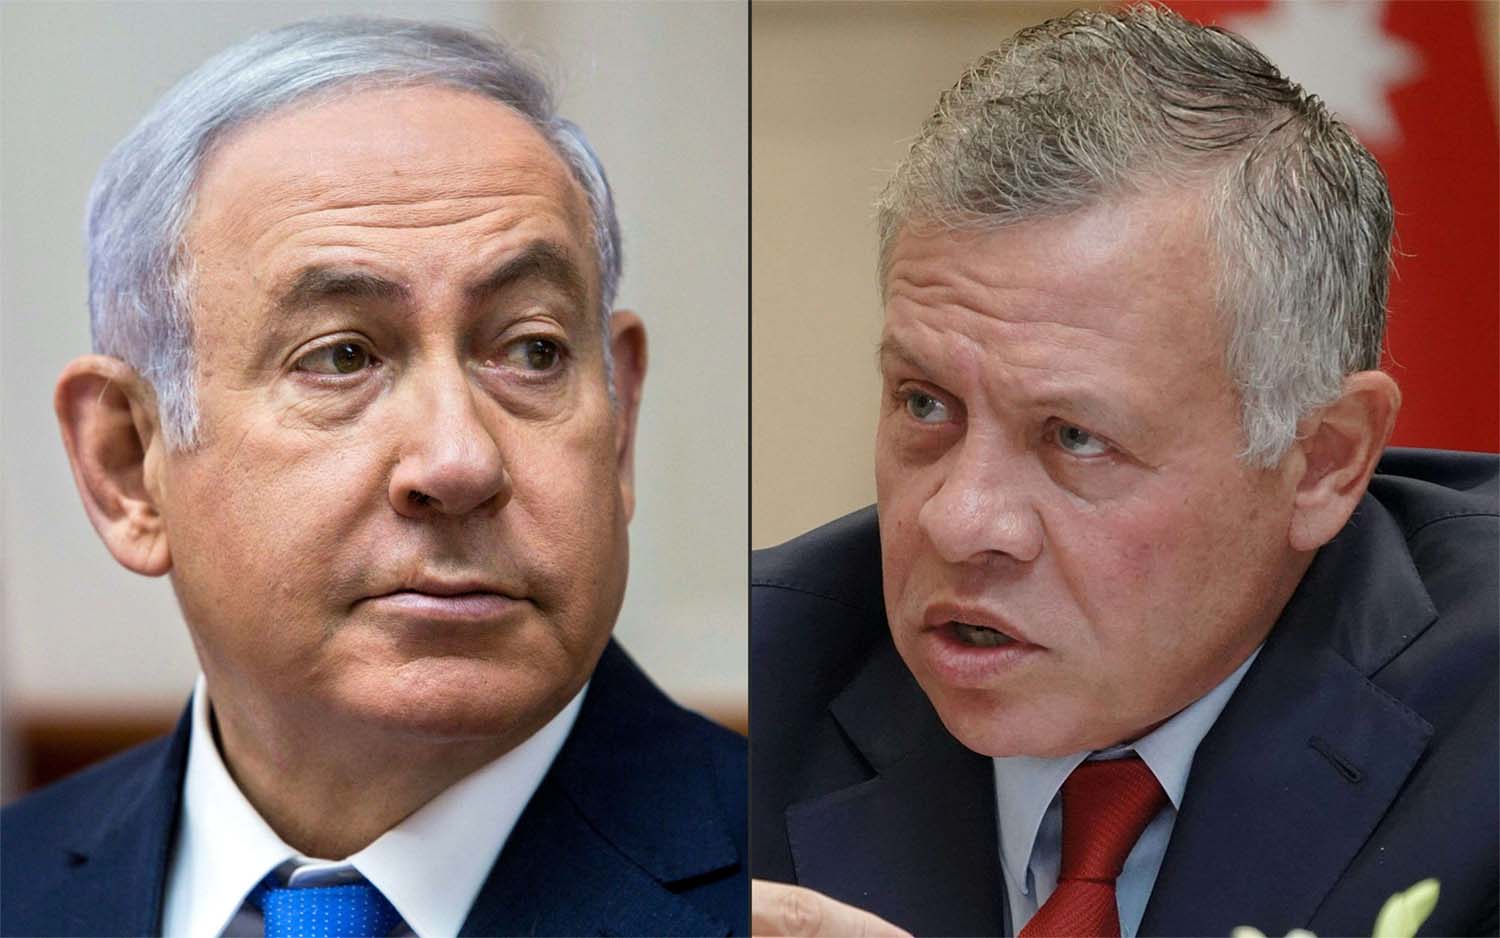 Under Prime Minister Netanyahu’s leadership, Israel-Jordan relations have hit a new low